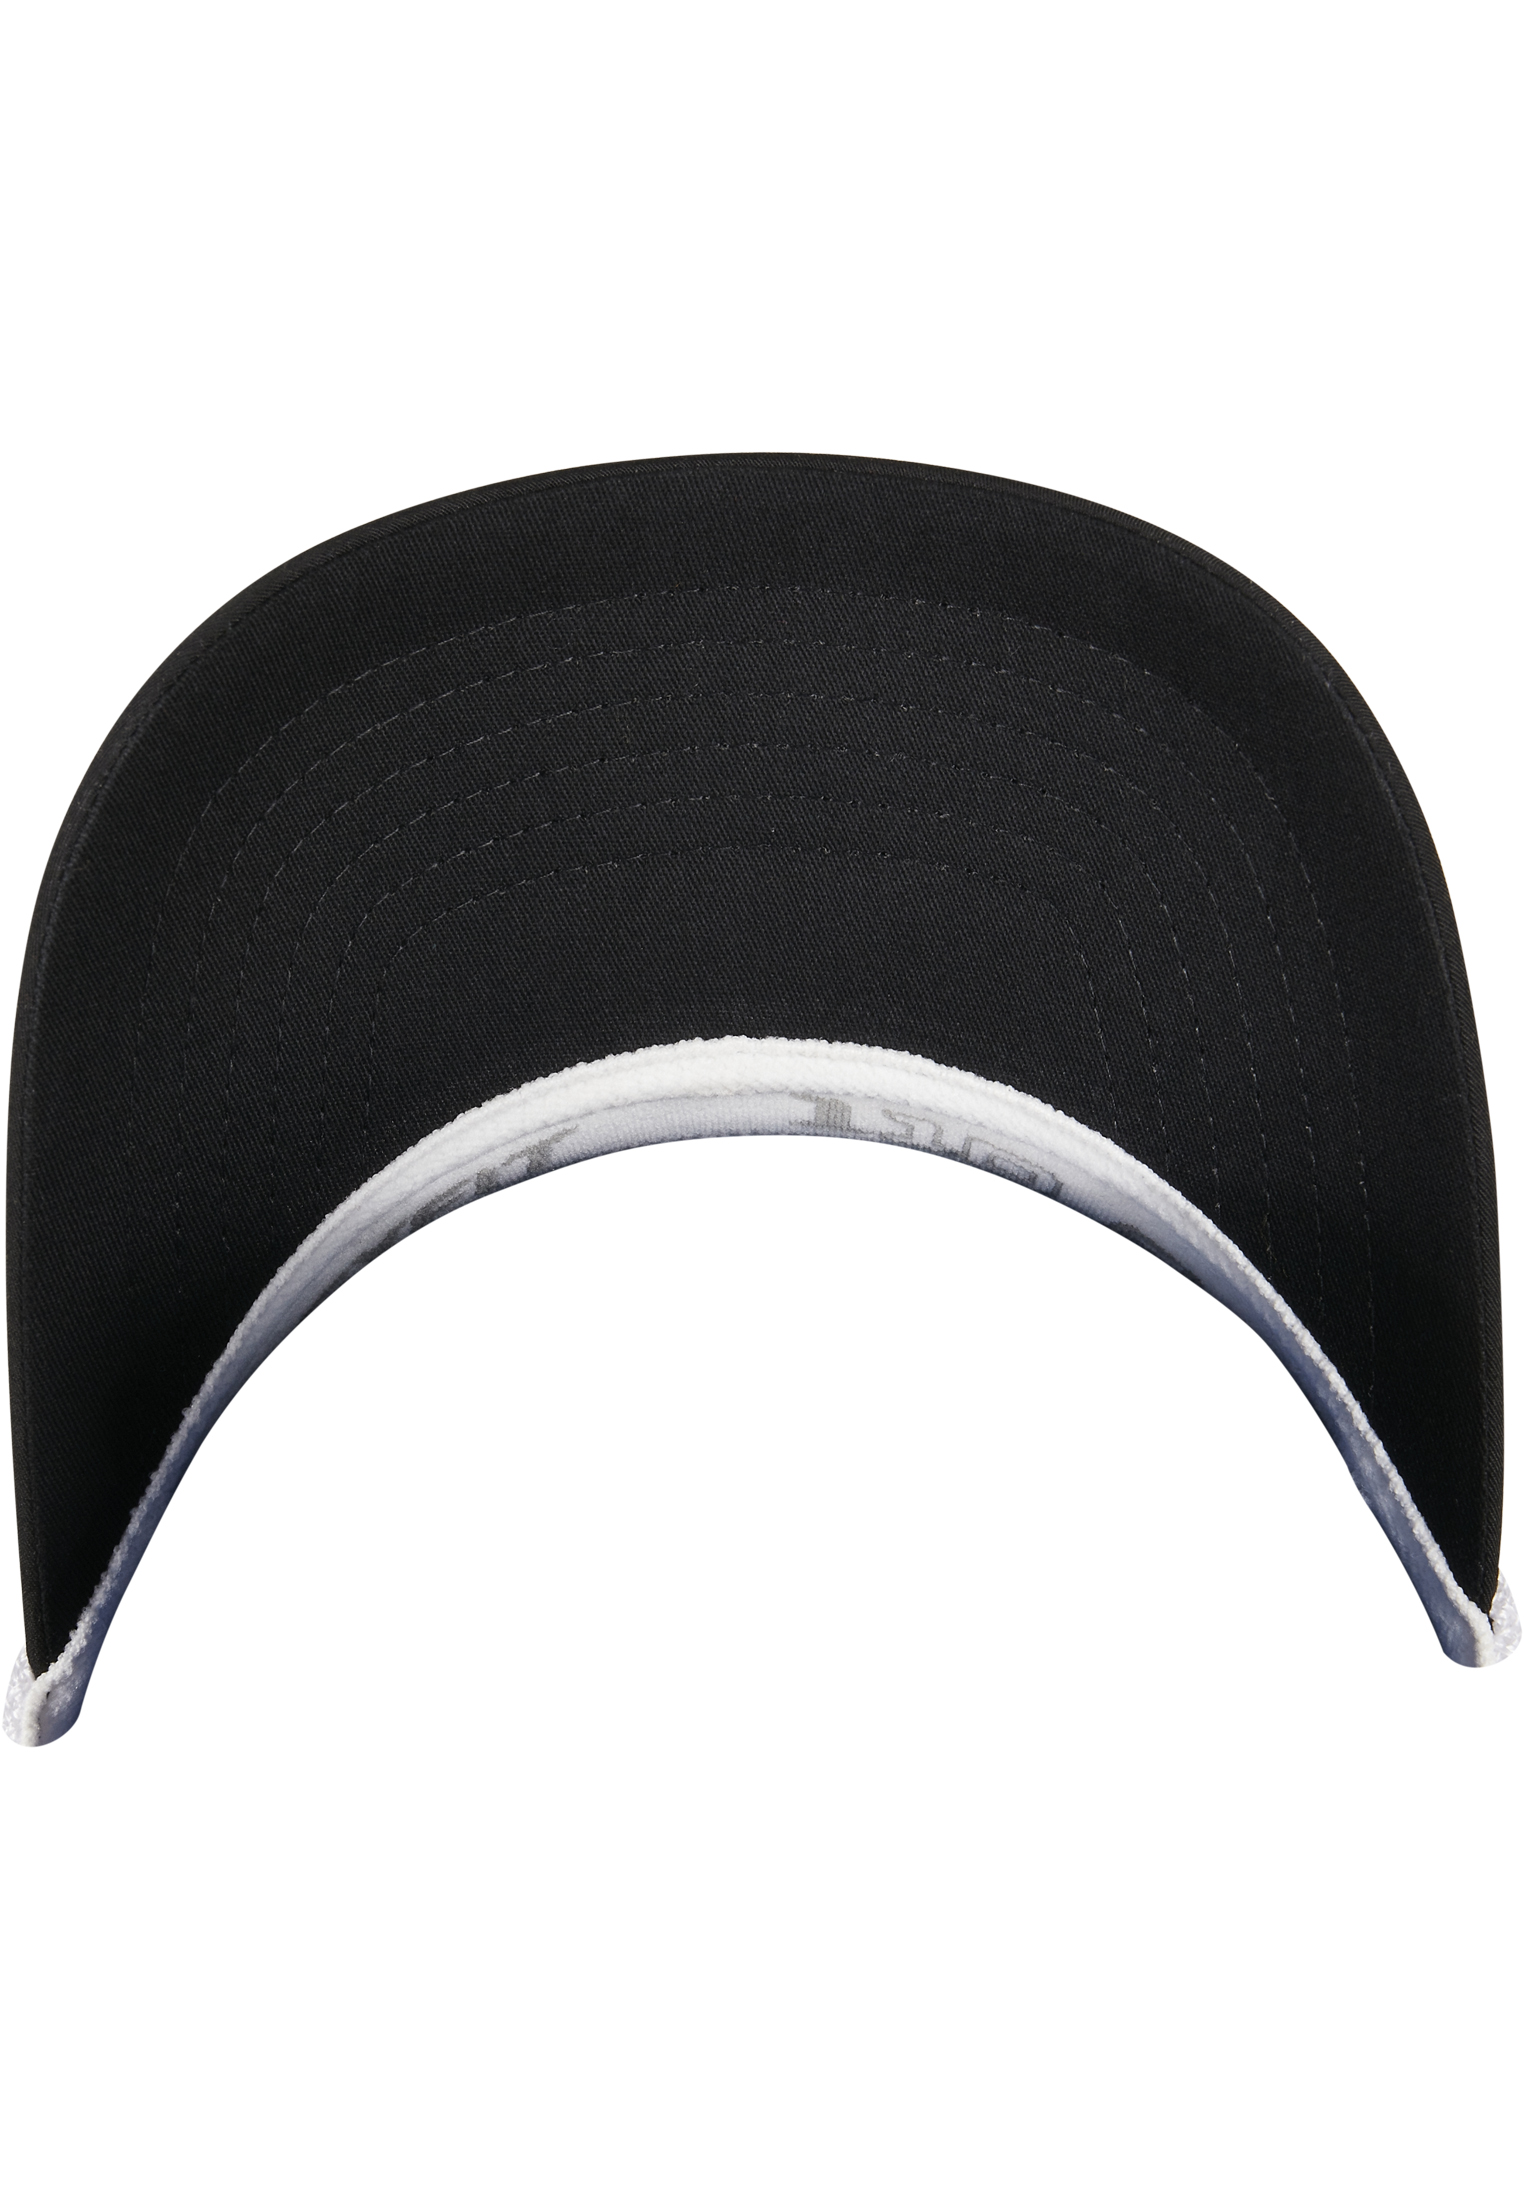 Nachhaltig FLEXFIT 110 RECYCLED CAP 2-TONE in Farbe black/white